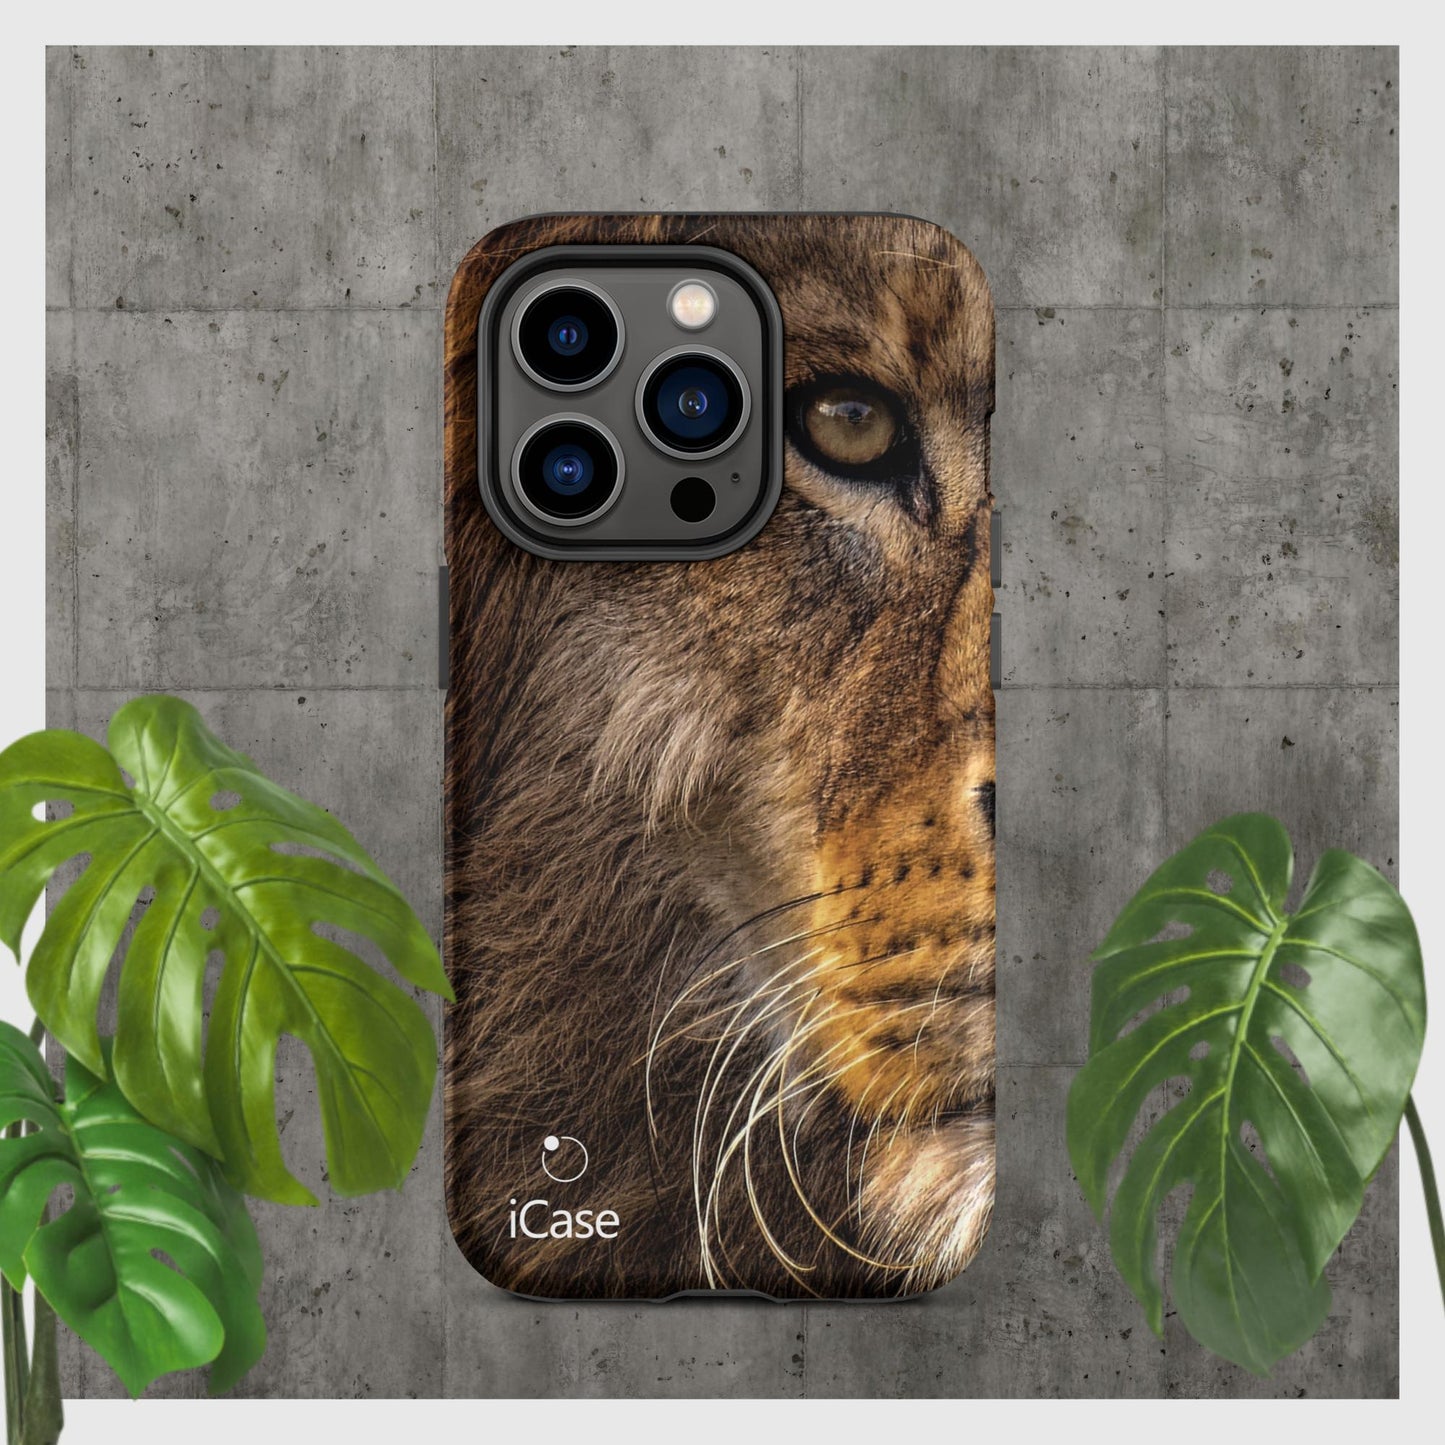 iCase® Lion HardCase iPhone® mobile phone case